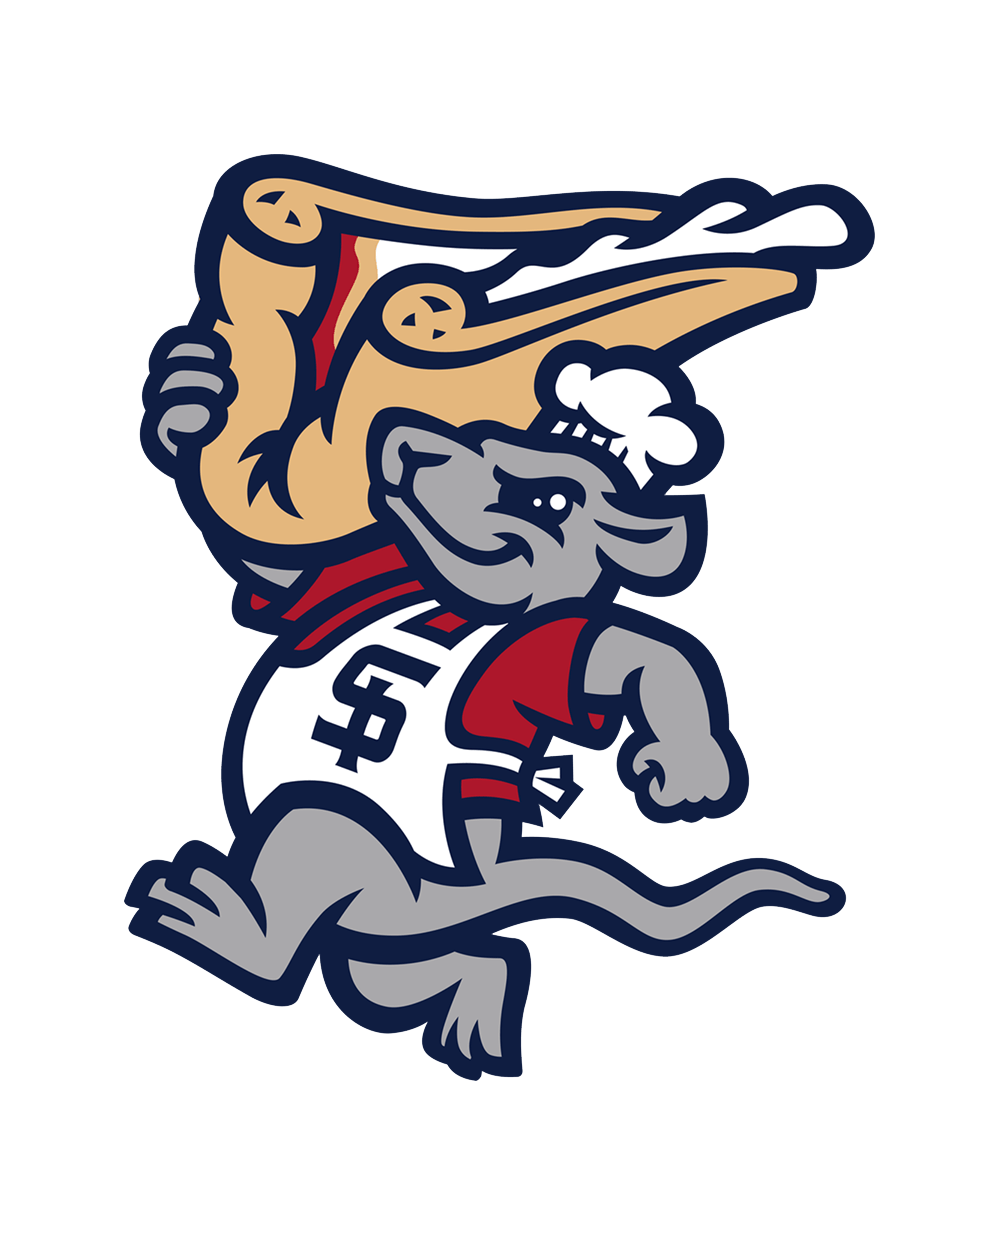 Rat Sports Logo - Welcome the Staten Island Pizza Rats - Alfalfa Studio